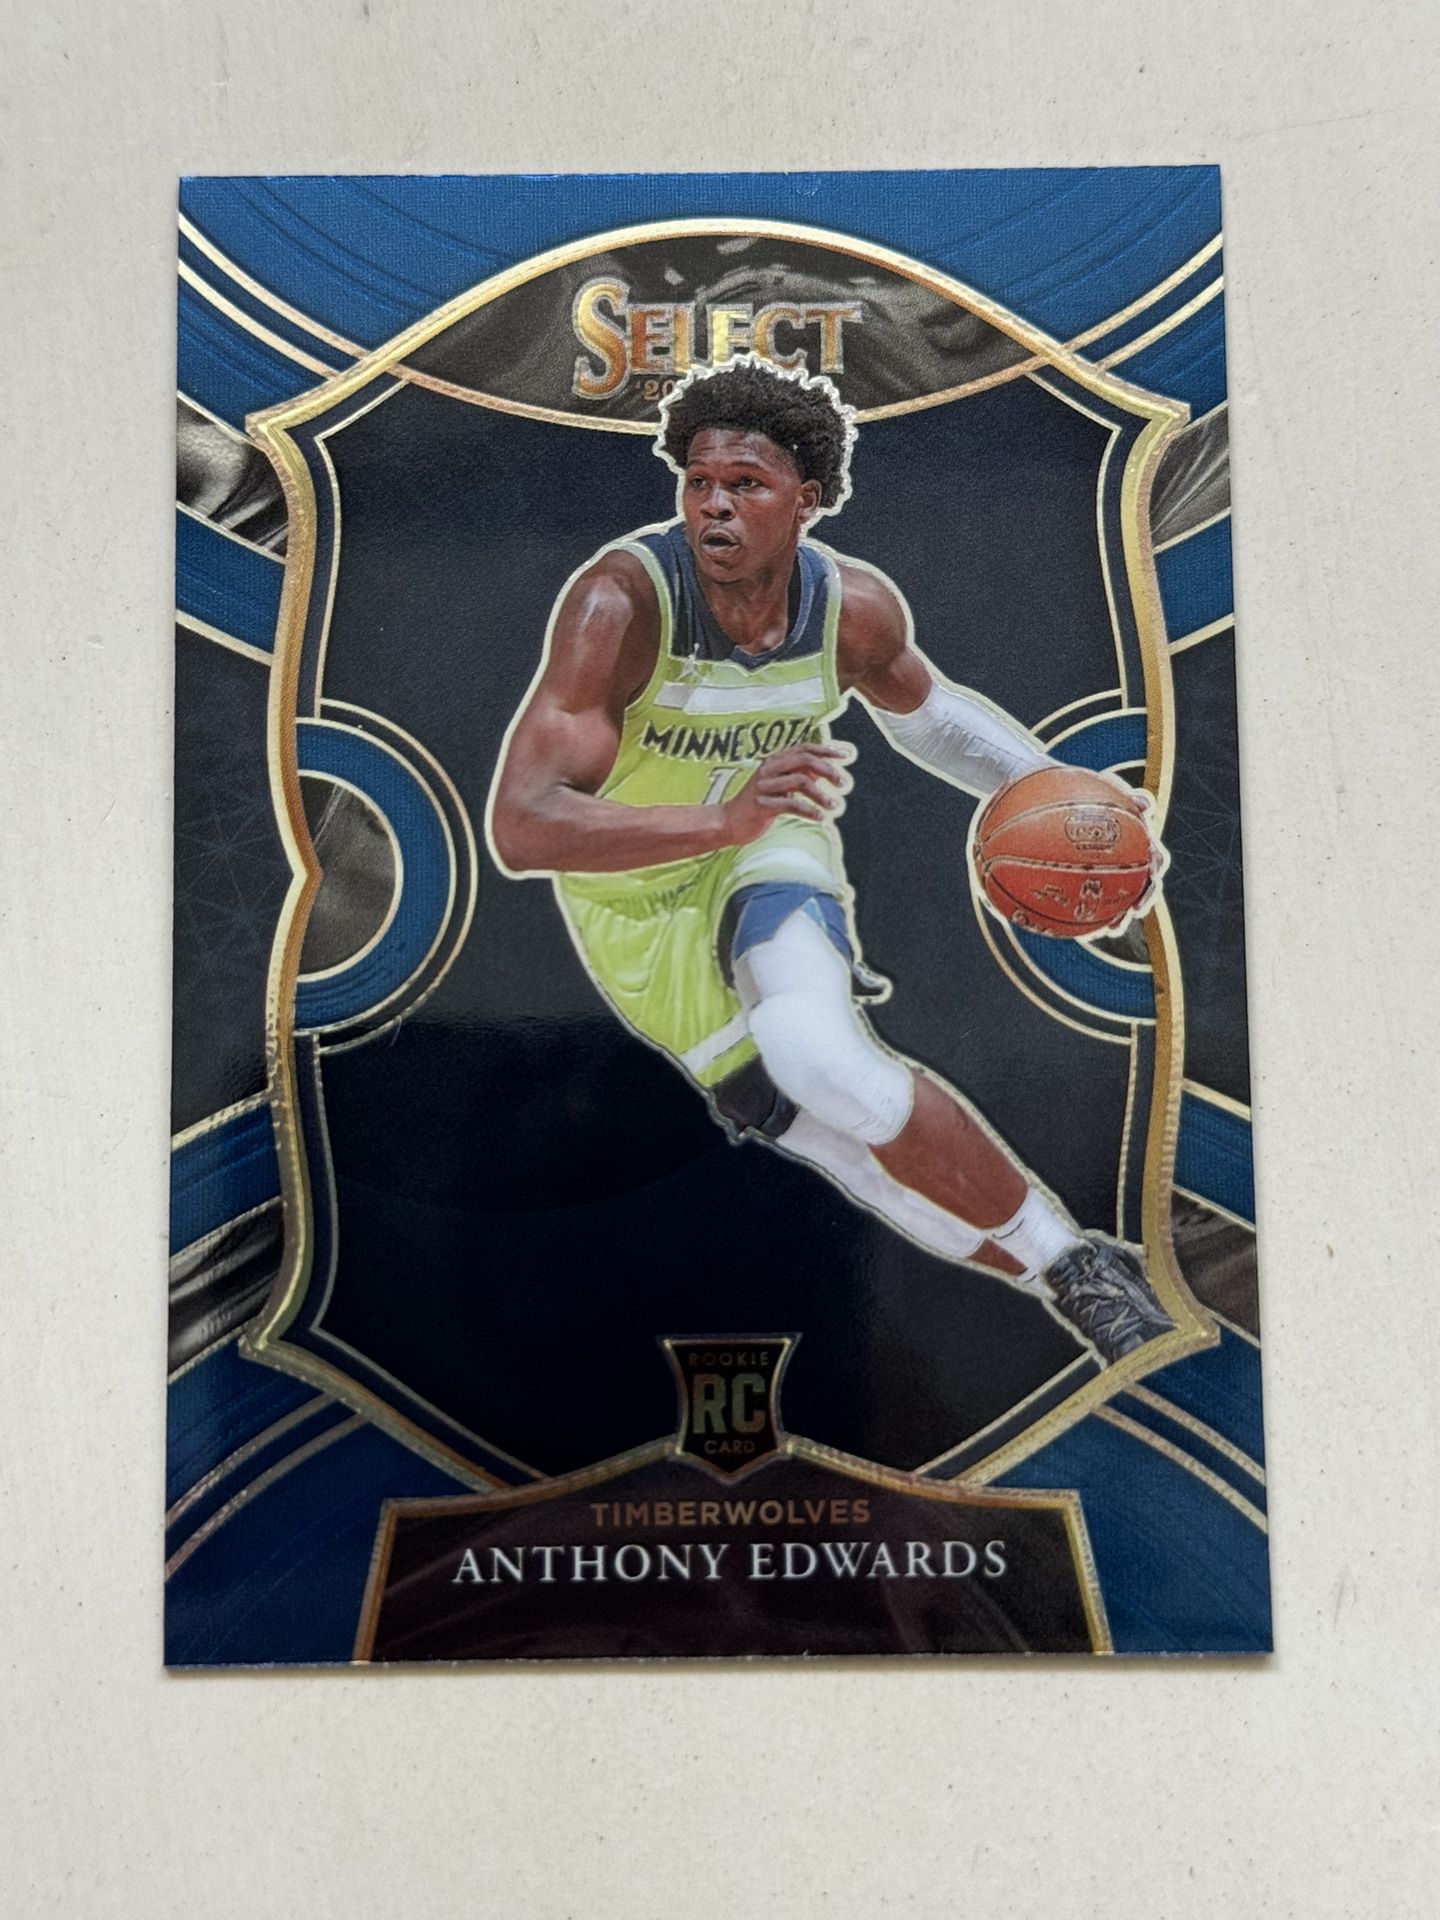 2020 Select Anthony Edwards Blue Rookie #61 Timberwolves (4)